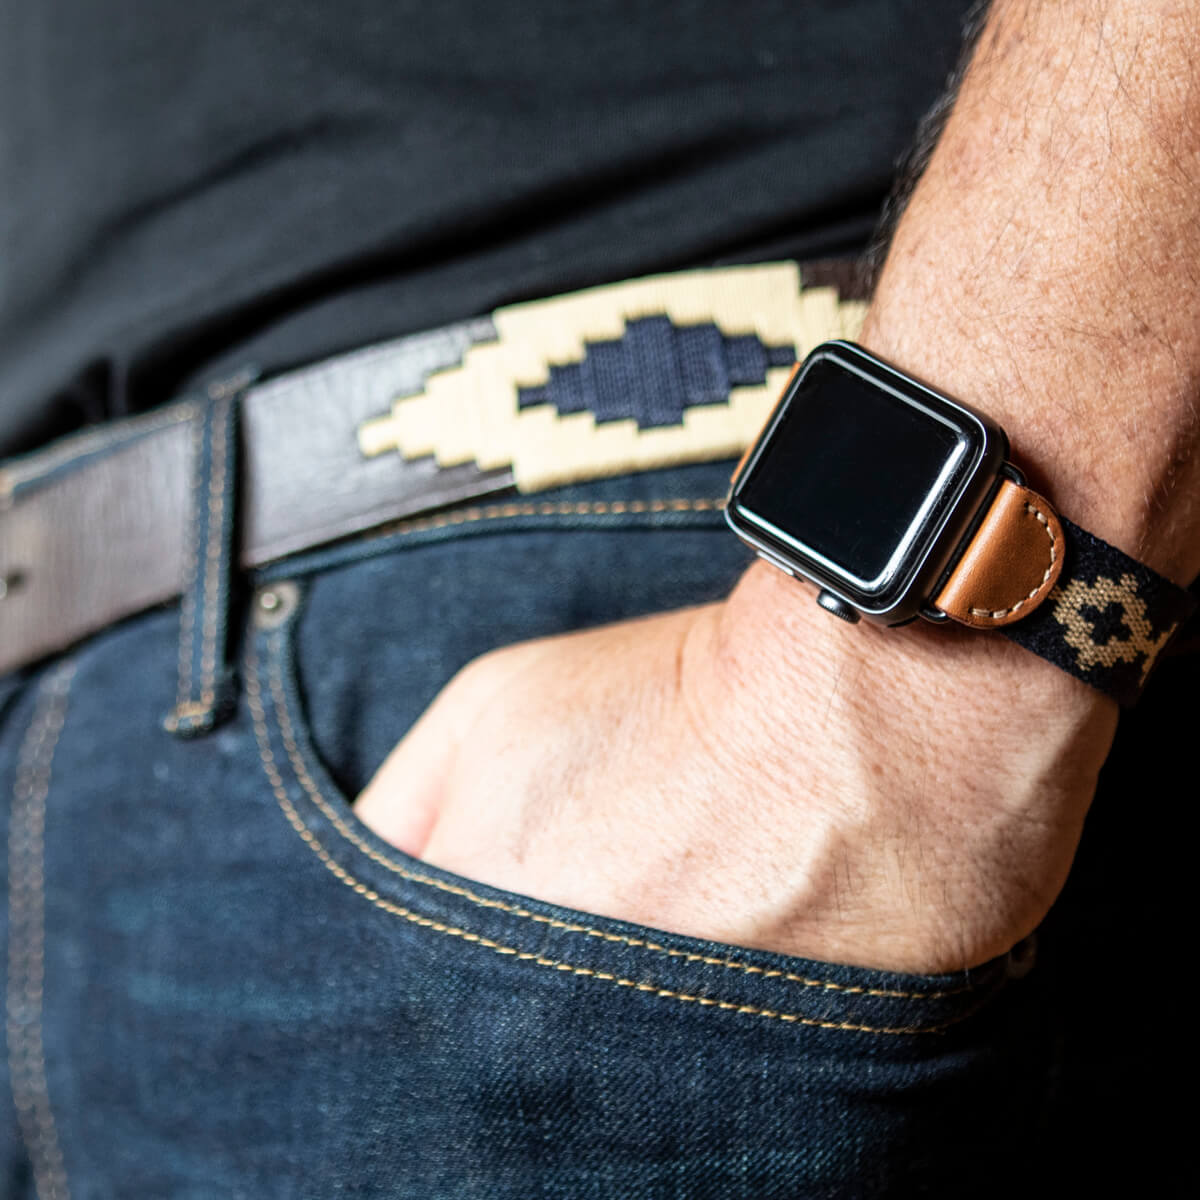 Corbina Apple Watch Band